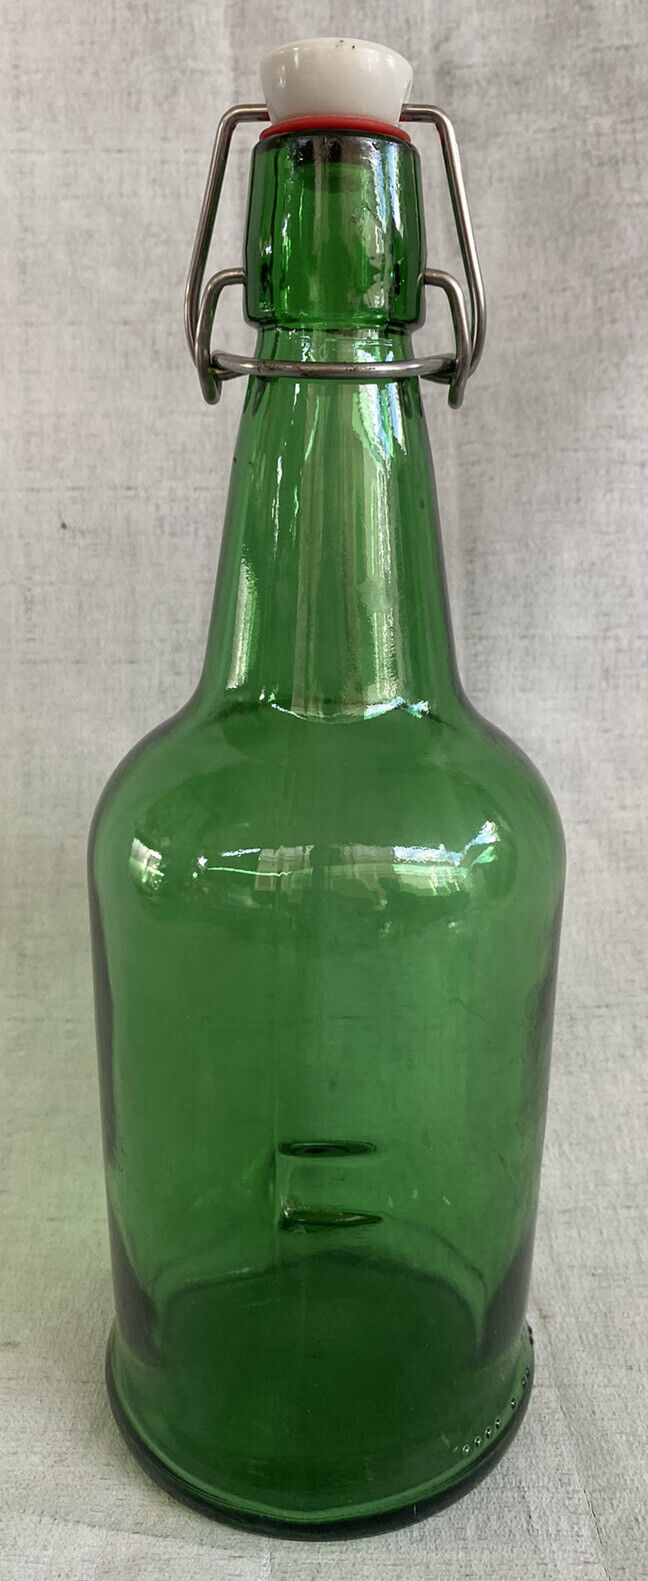 22oz Vintage Swing Top Green Beer Bottle